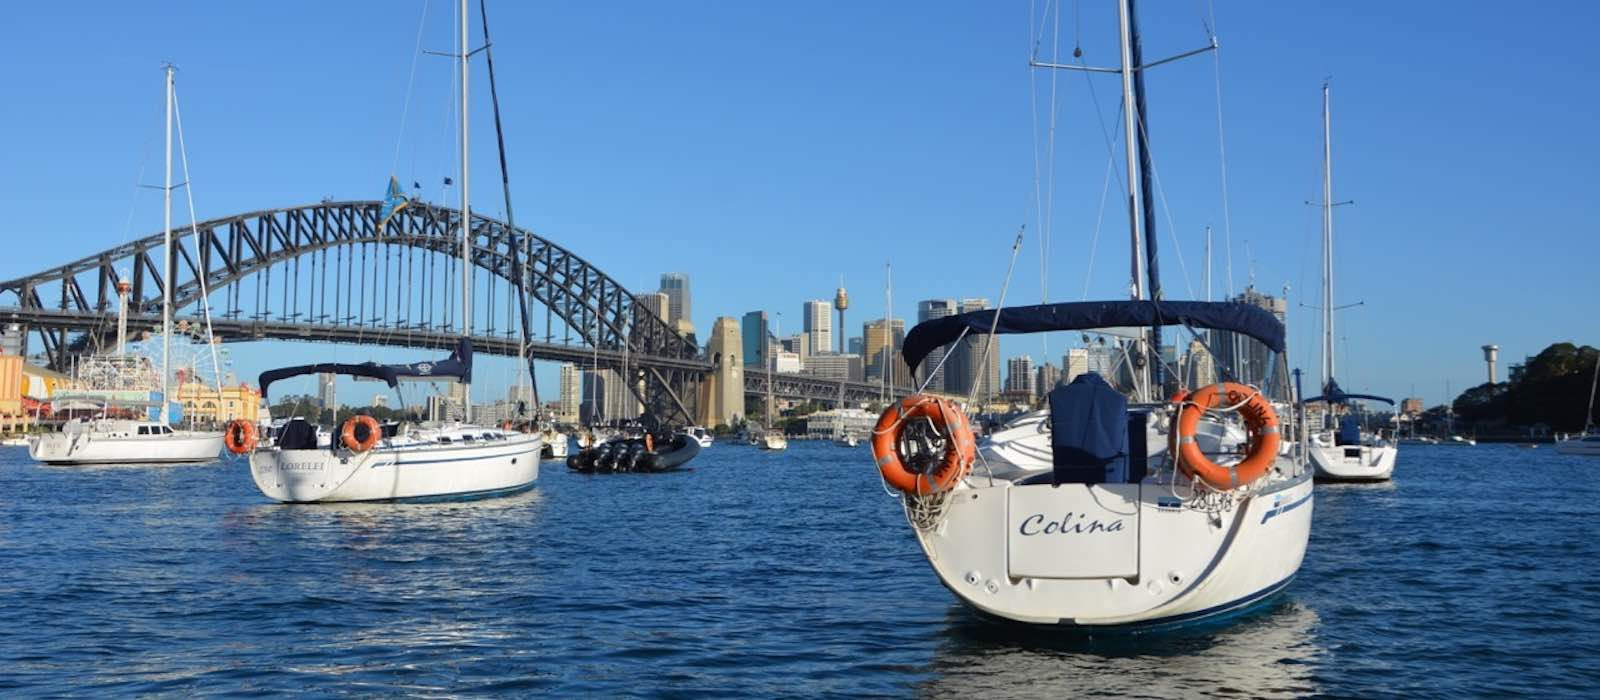 Romantic Overnight Stay on Sydney Harbour